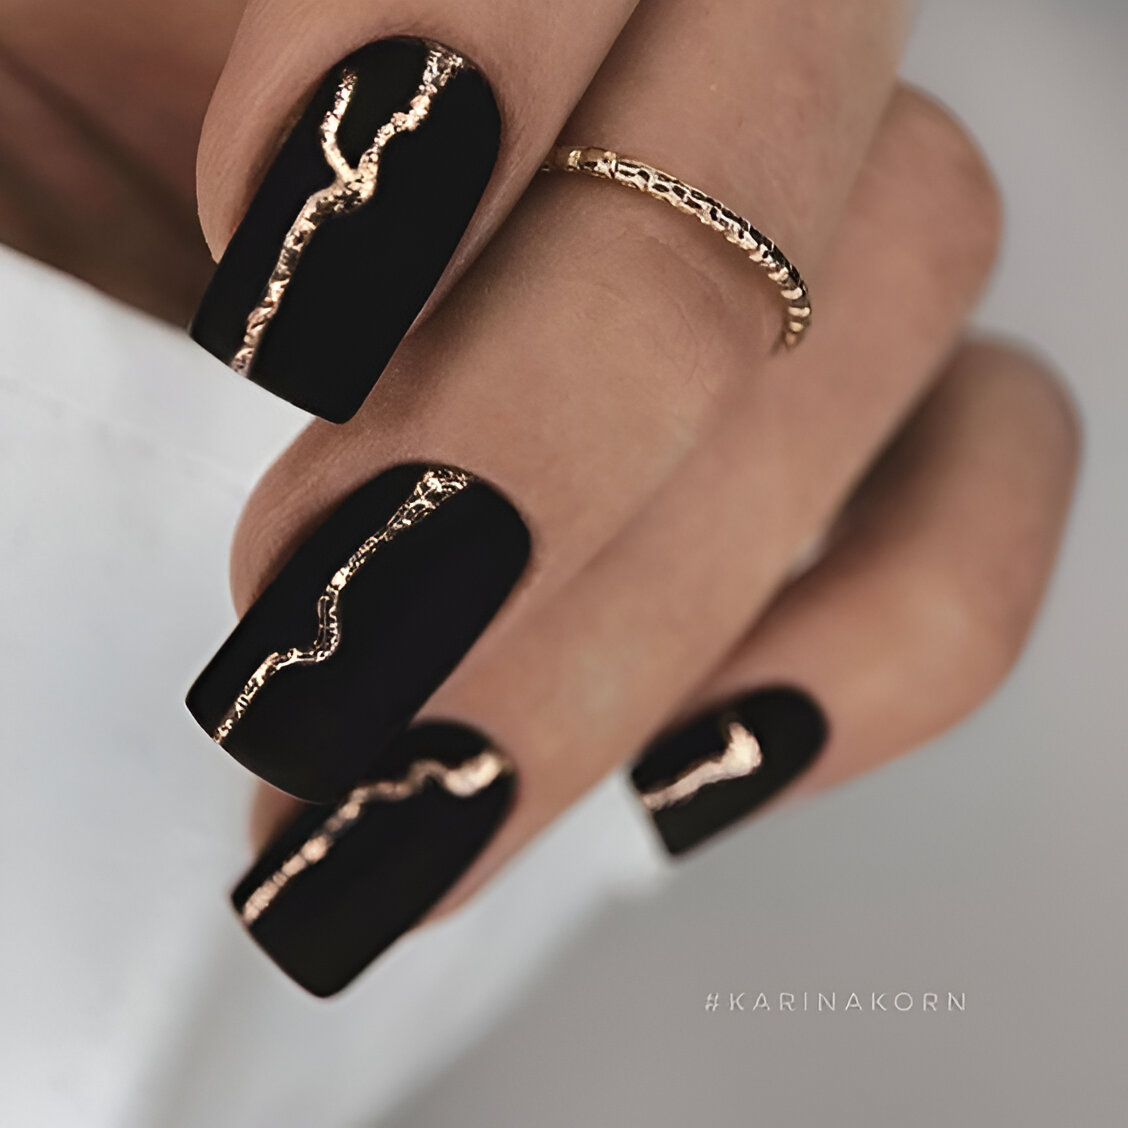 Minimalistic Black Acrylic Nails